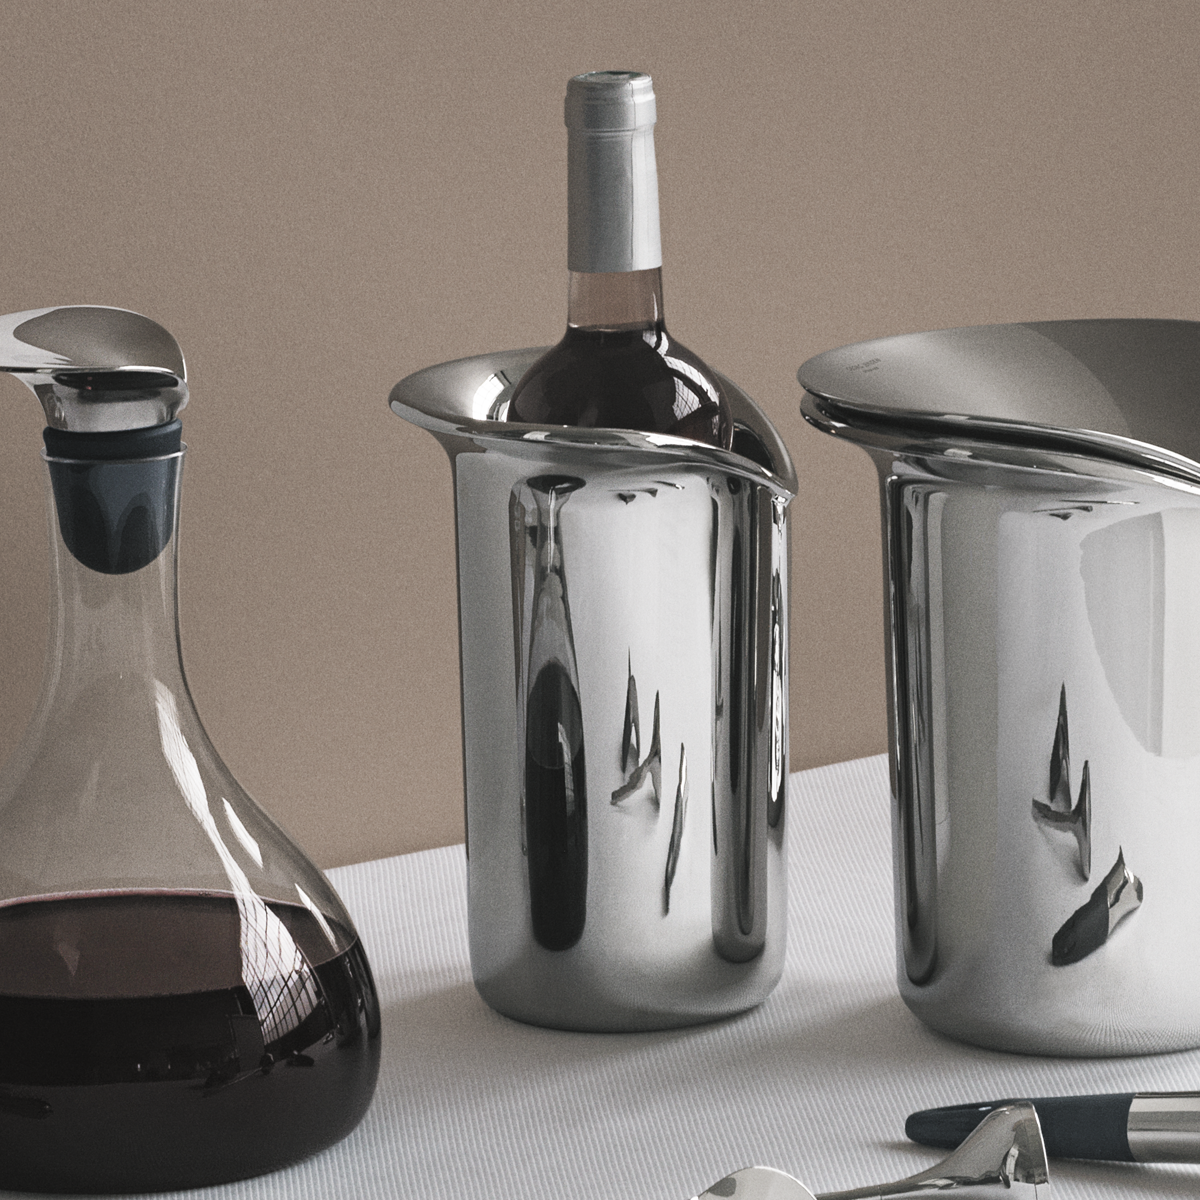 Maison Lipari Wine & Bar Cooler - Silver  GEORG JENSEN.